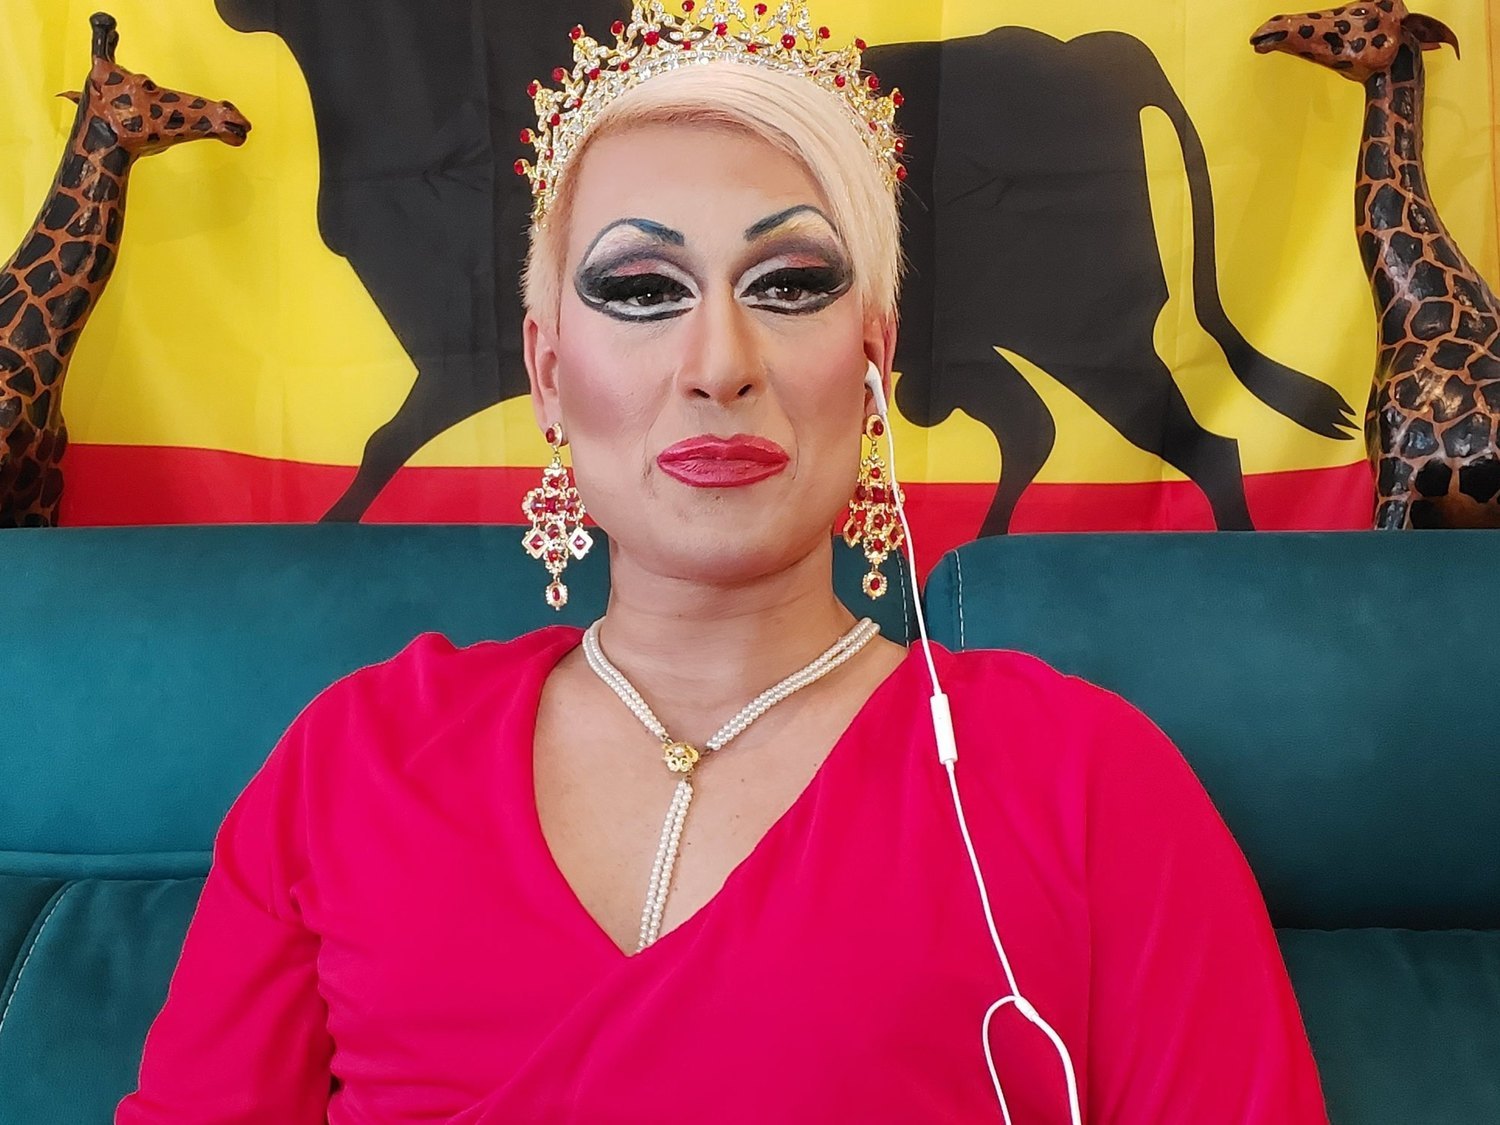 Madame Perlan, la drag queen de VOX en contra del colectivo LGTBI: "Es una secta"